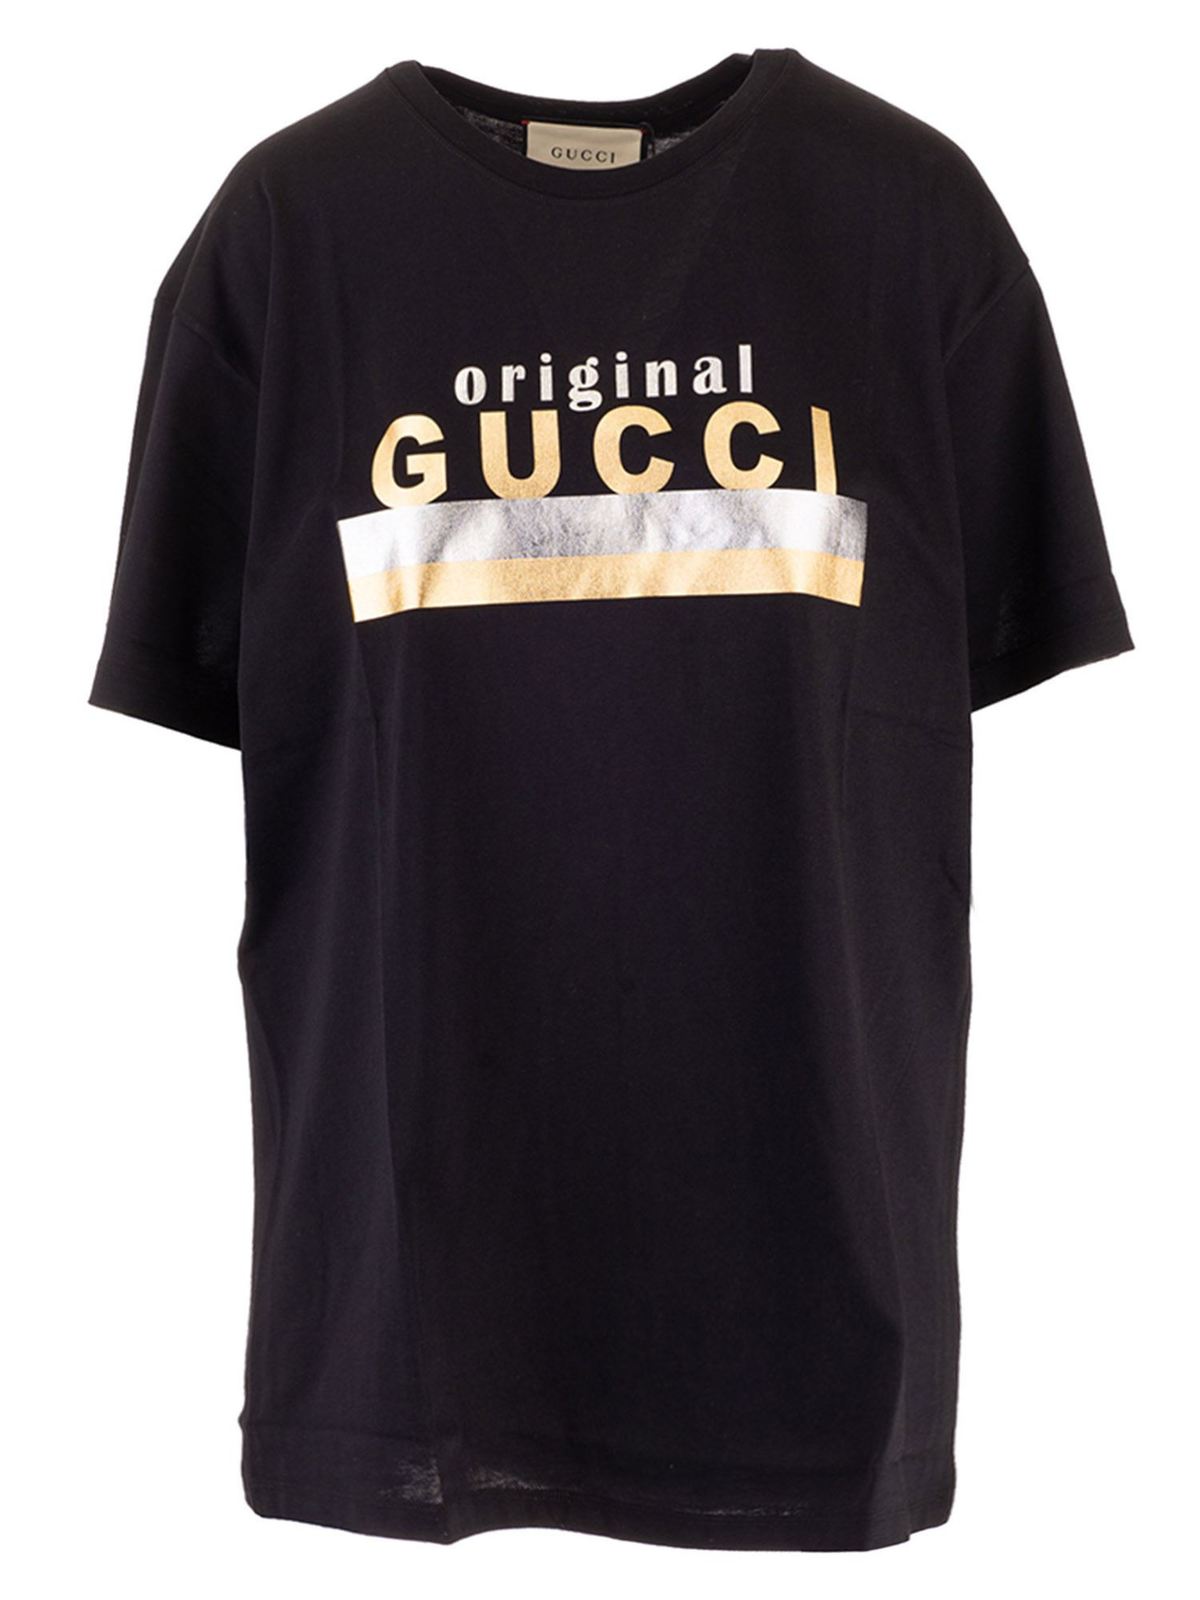 original gucci shirts